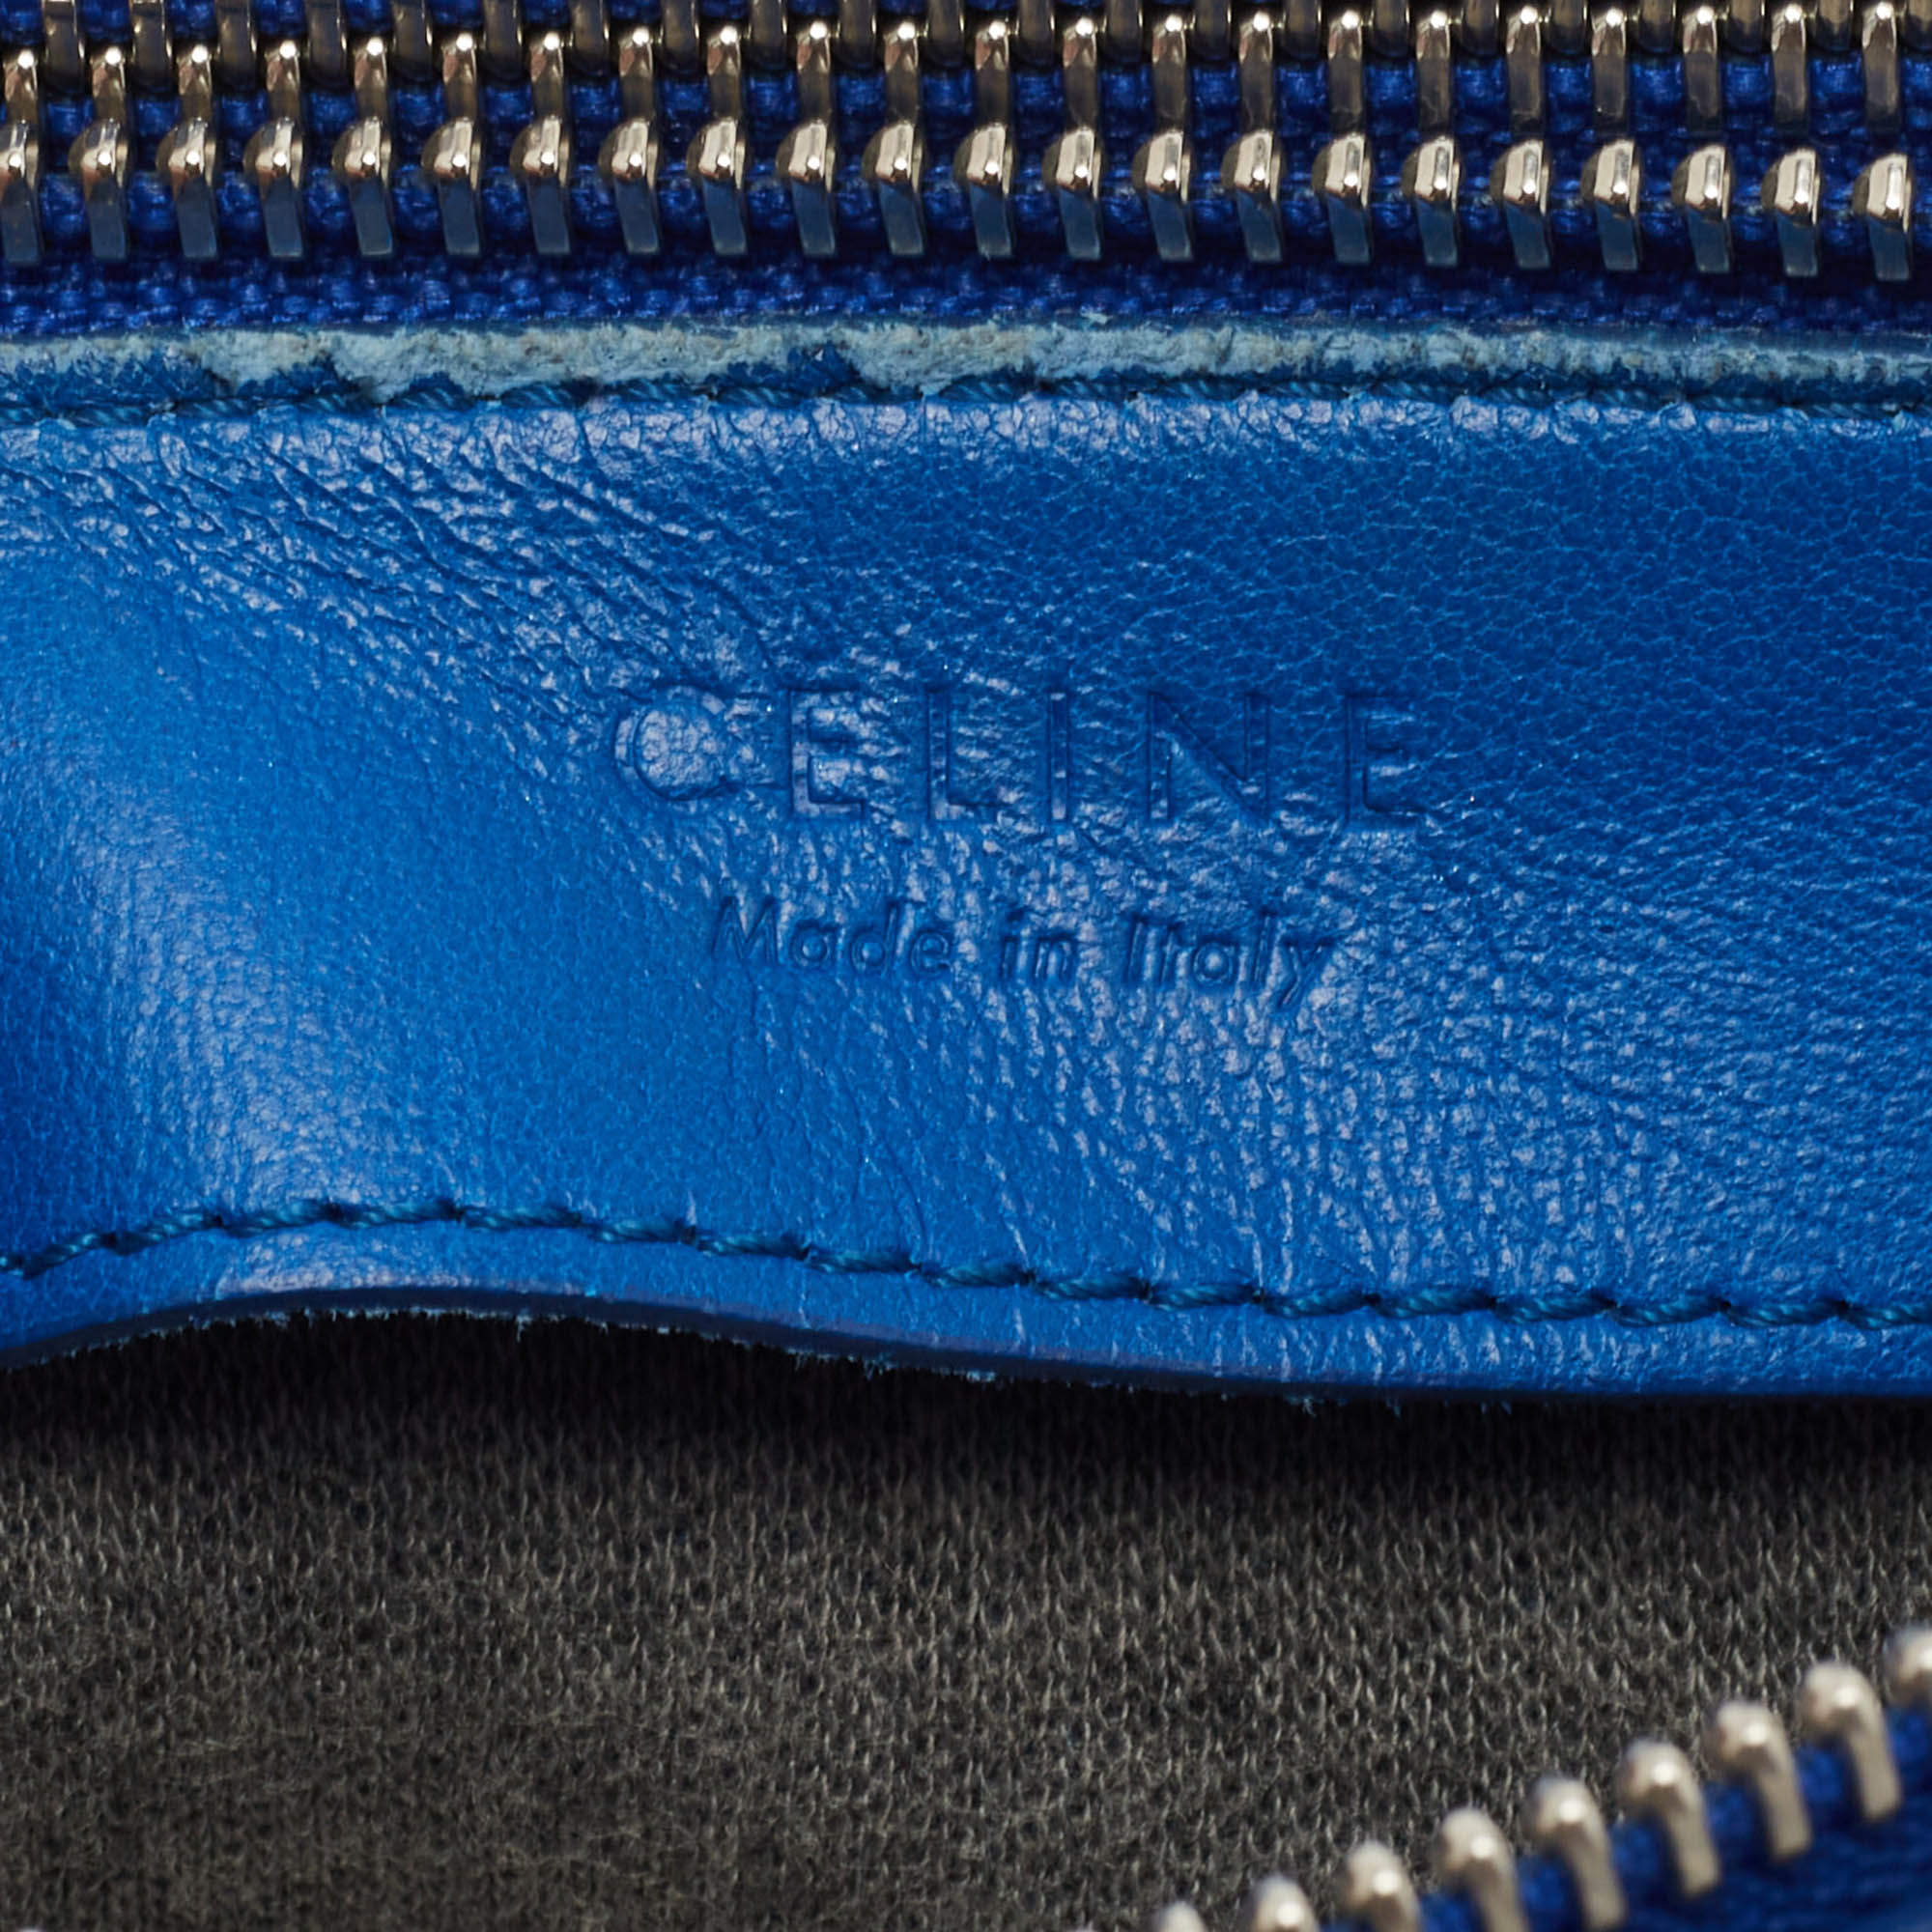 Trio leather crossbody bag Celine Blue in Leather - 24858807